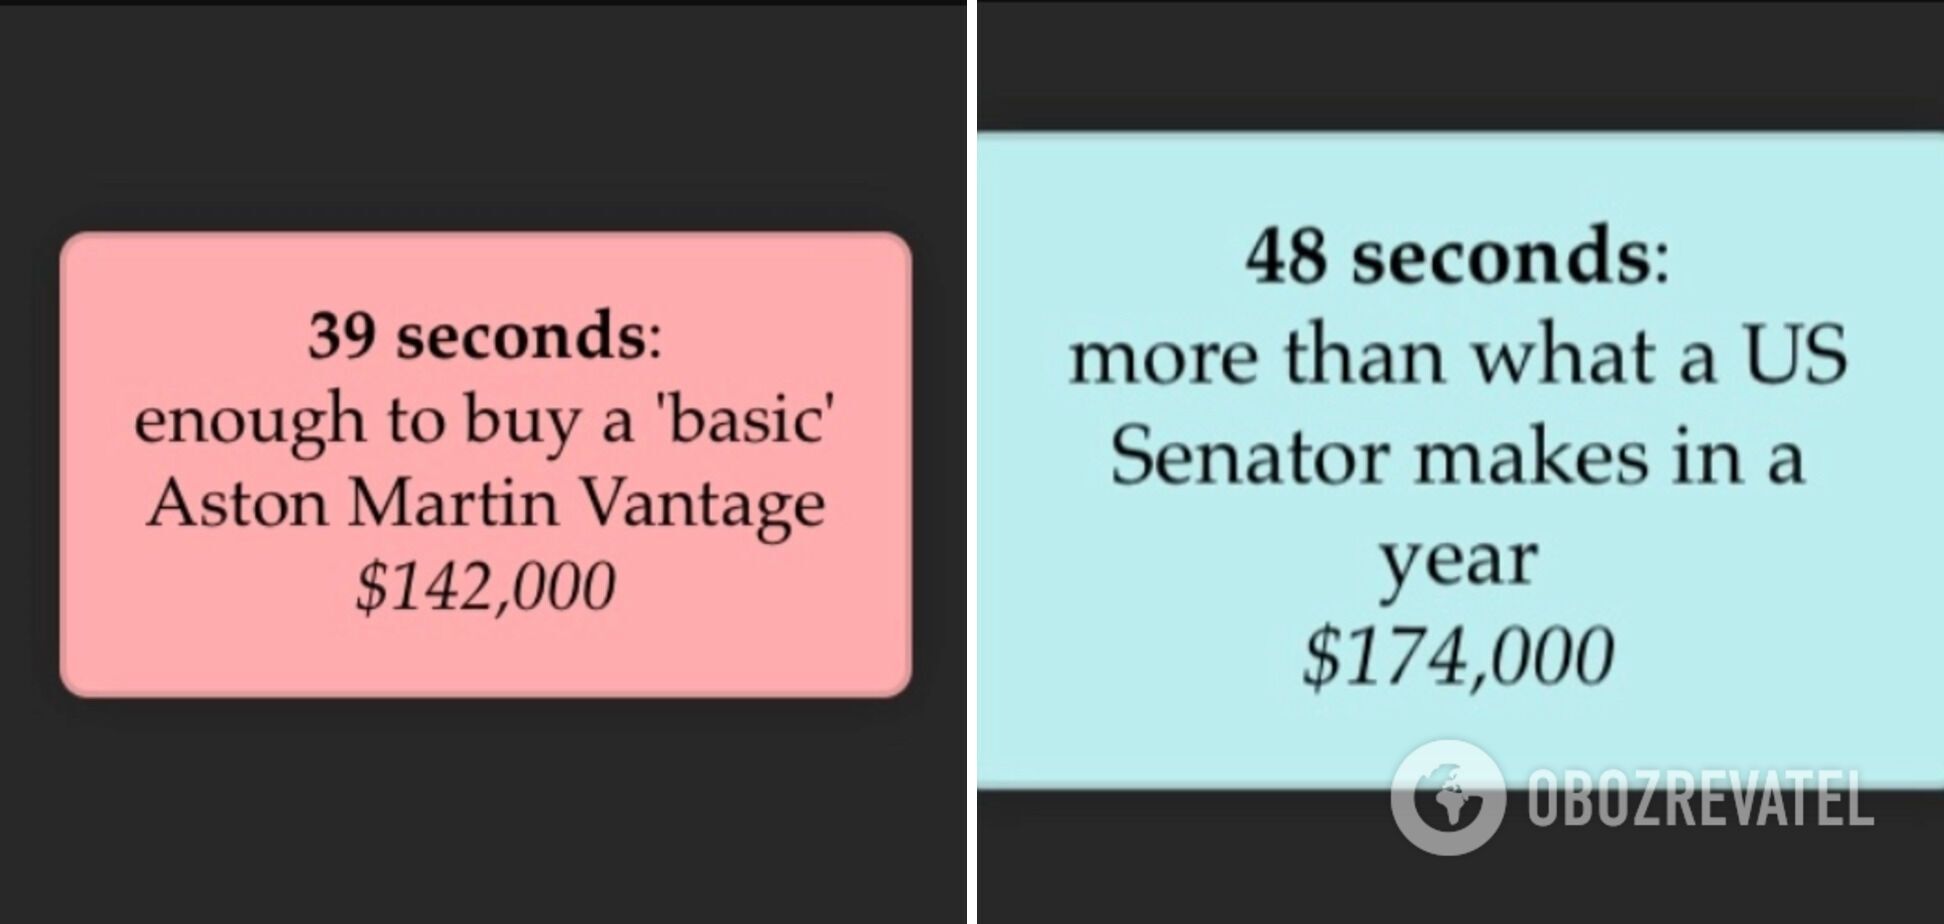 За 39 секунд доход Безоса составляет $142 000, а за 48 секунд – $174 000